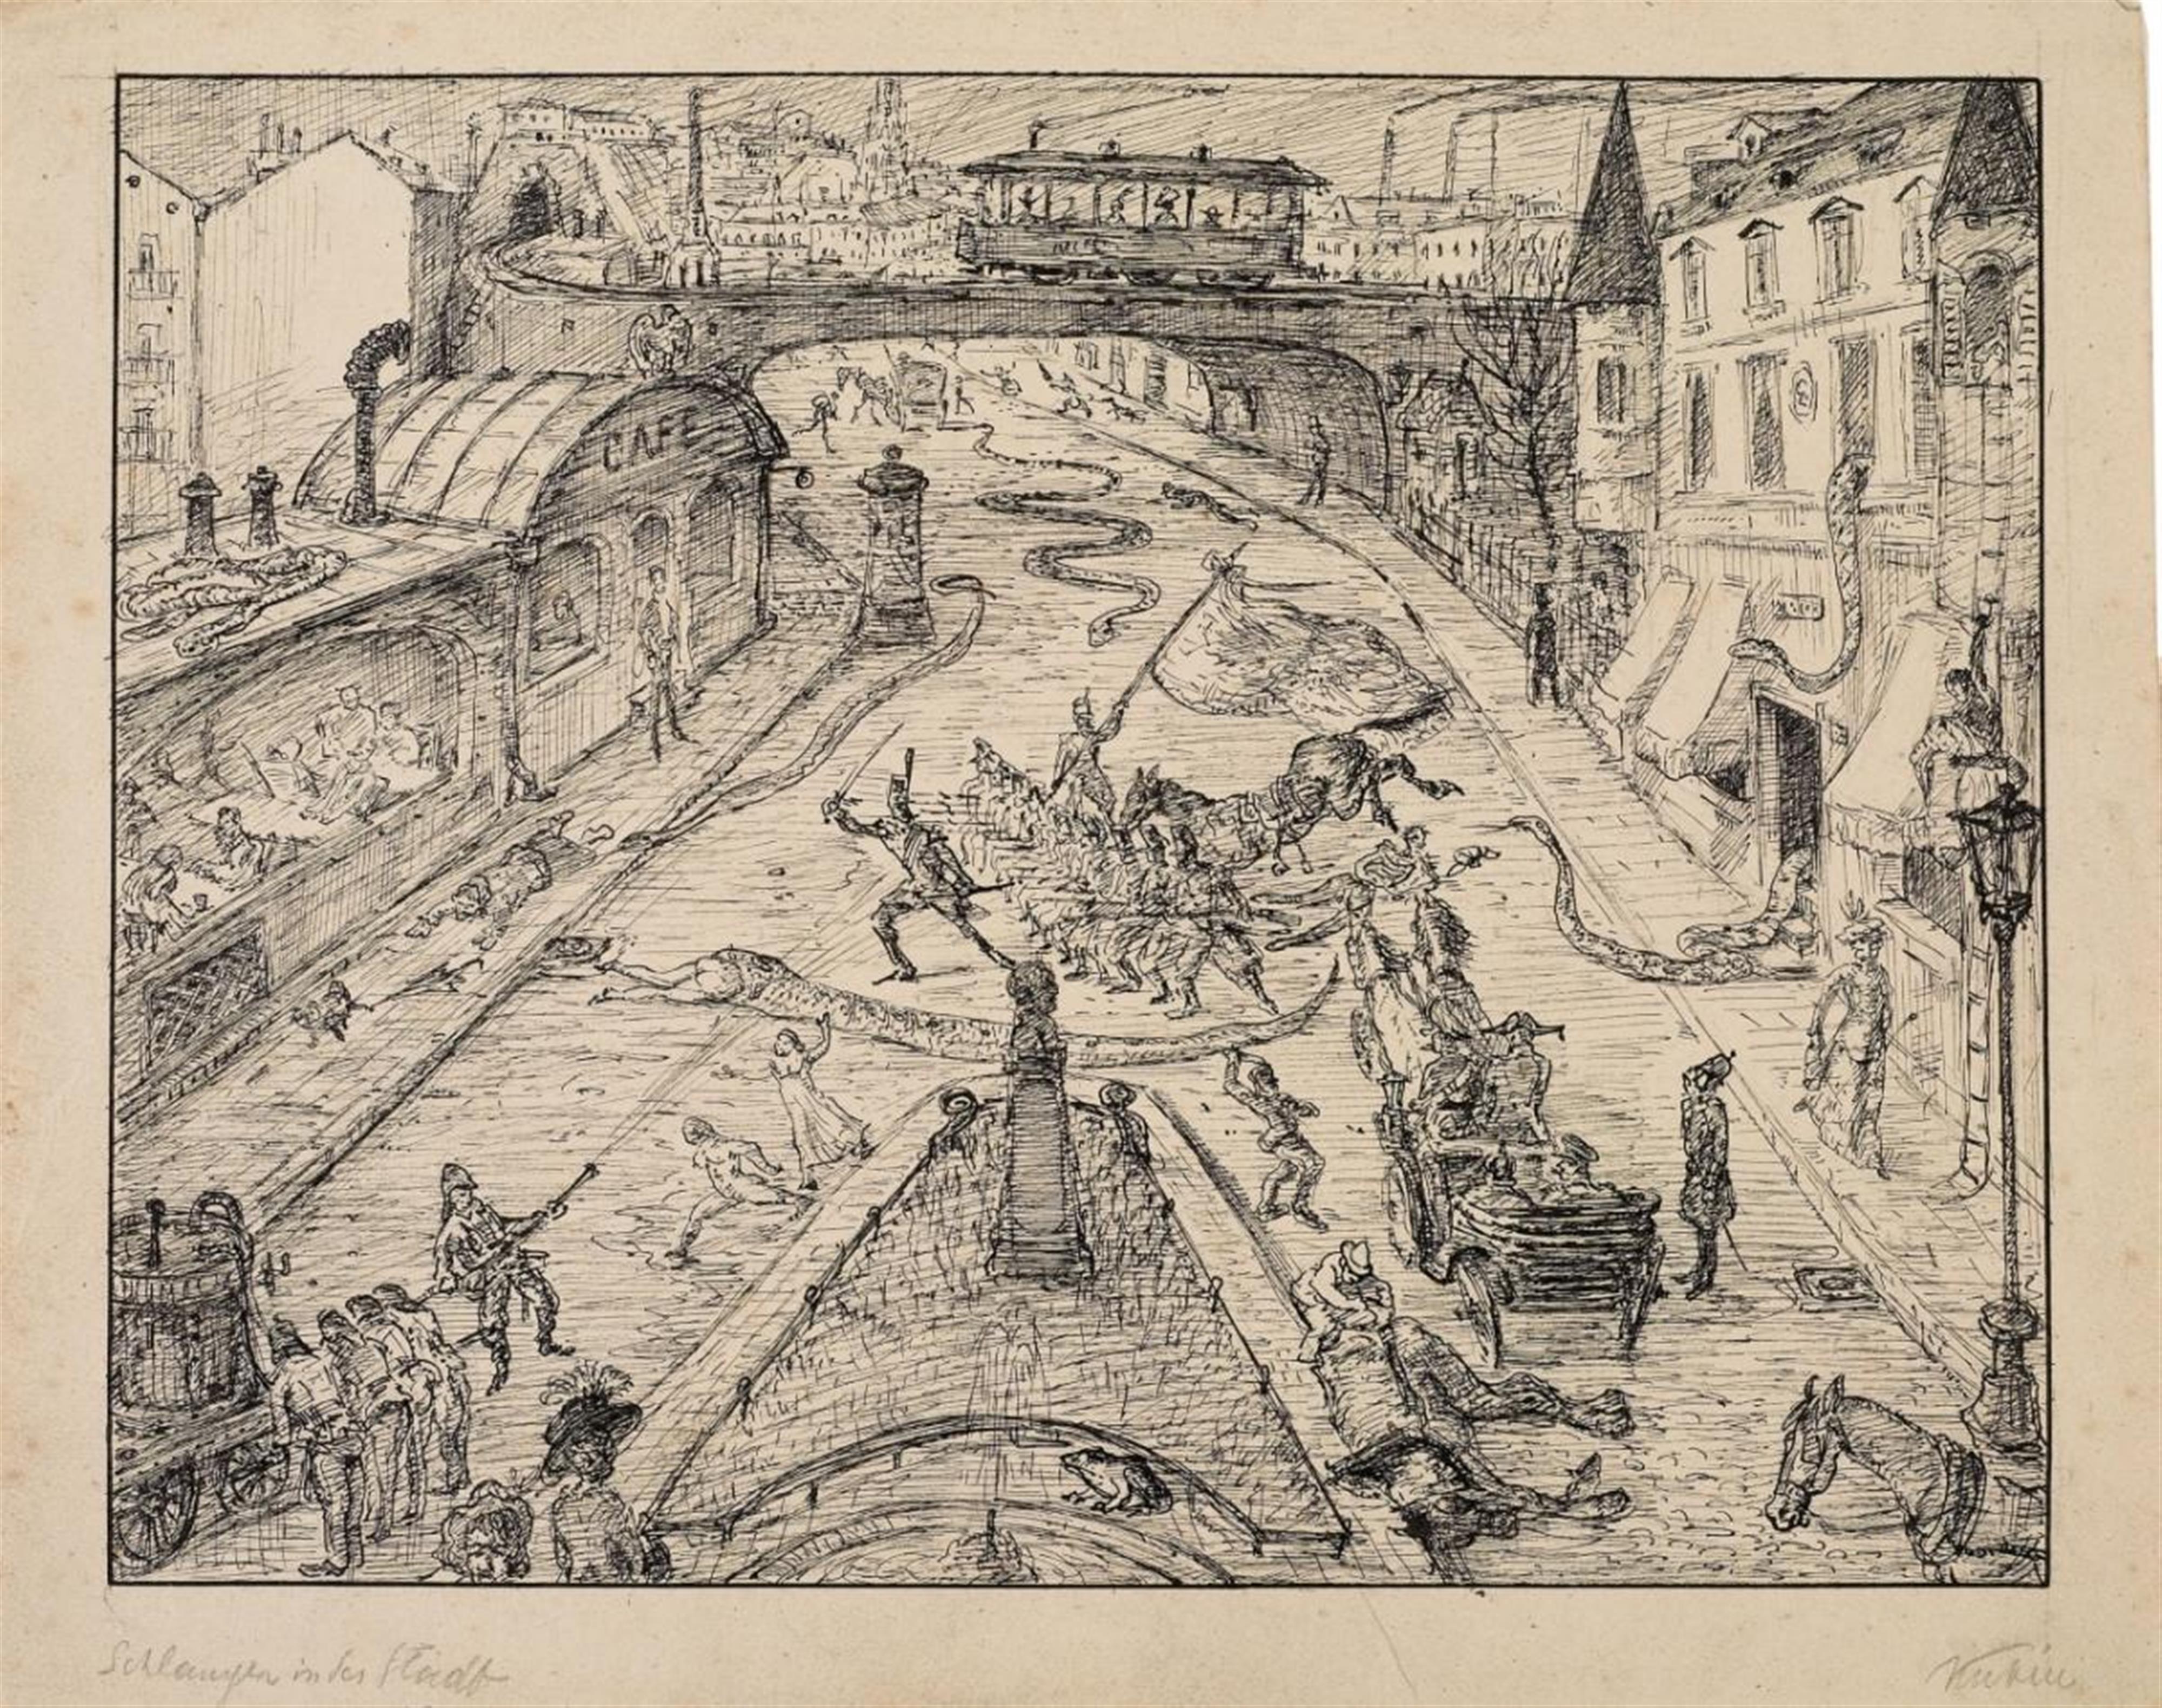 Alfred Kubin - Schlangen in der Stadt (Snakes in the City) - image-1